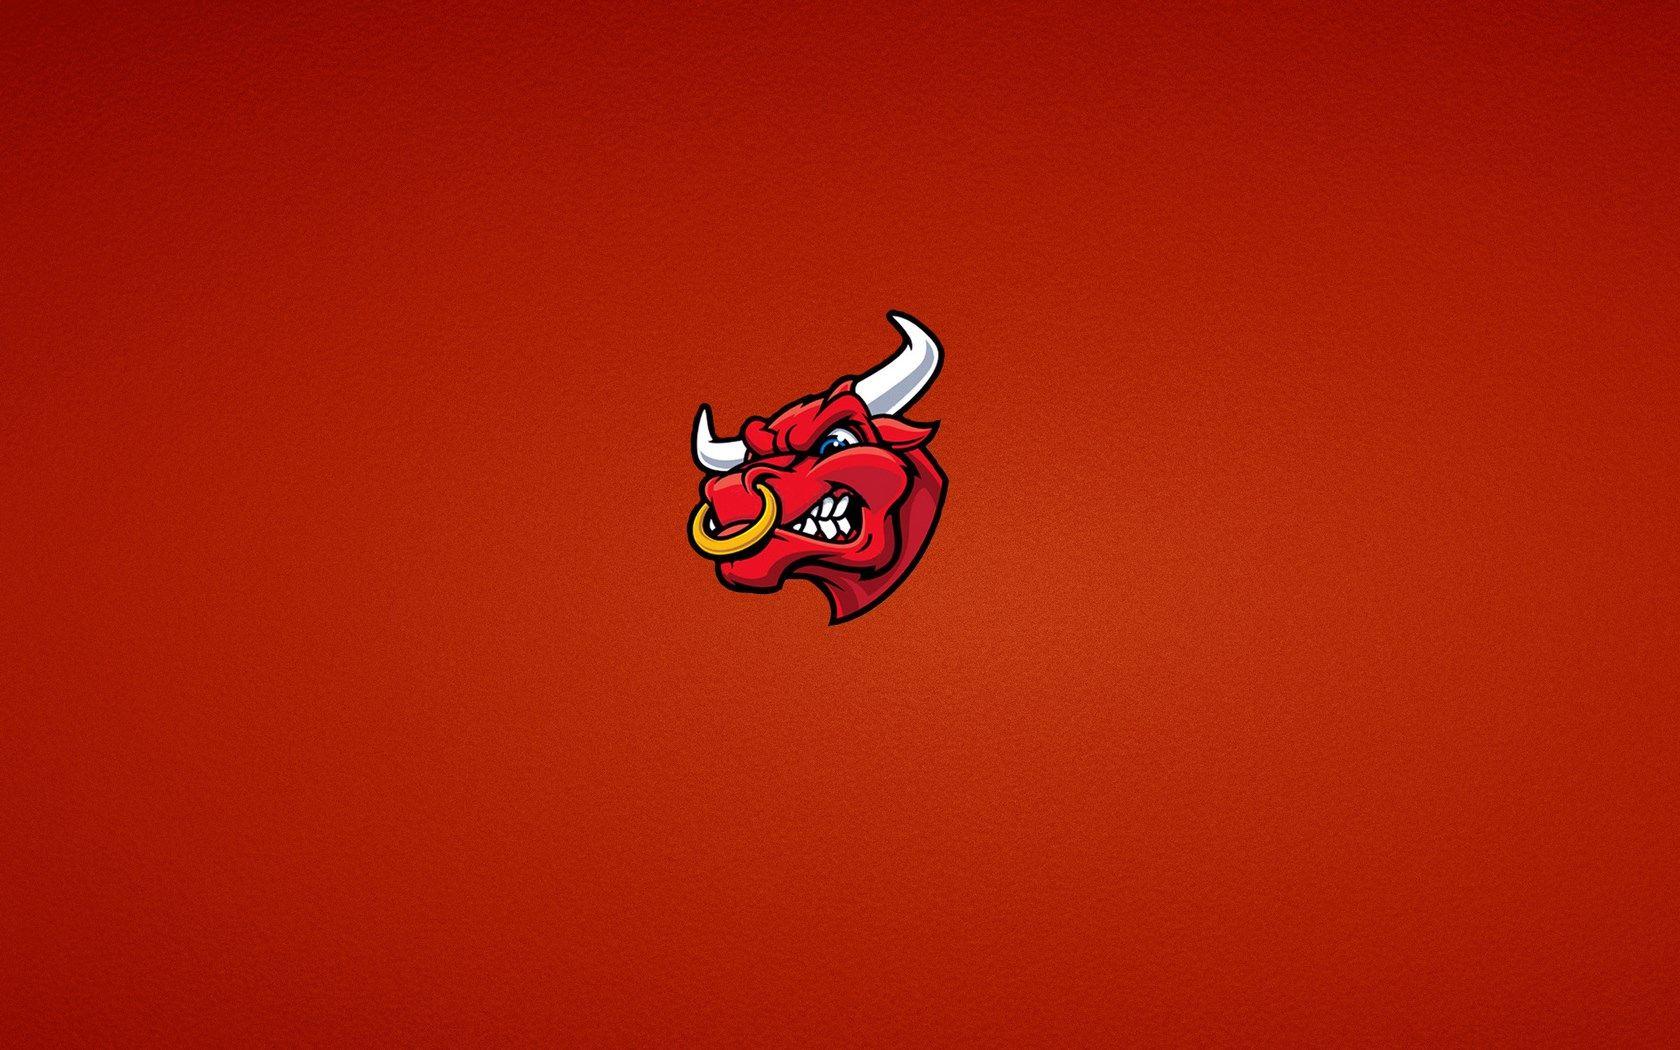 Fiersome Red Bull Illustration Desktop Wallpaper